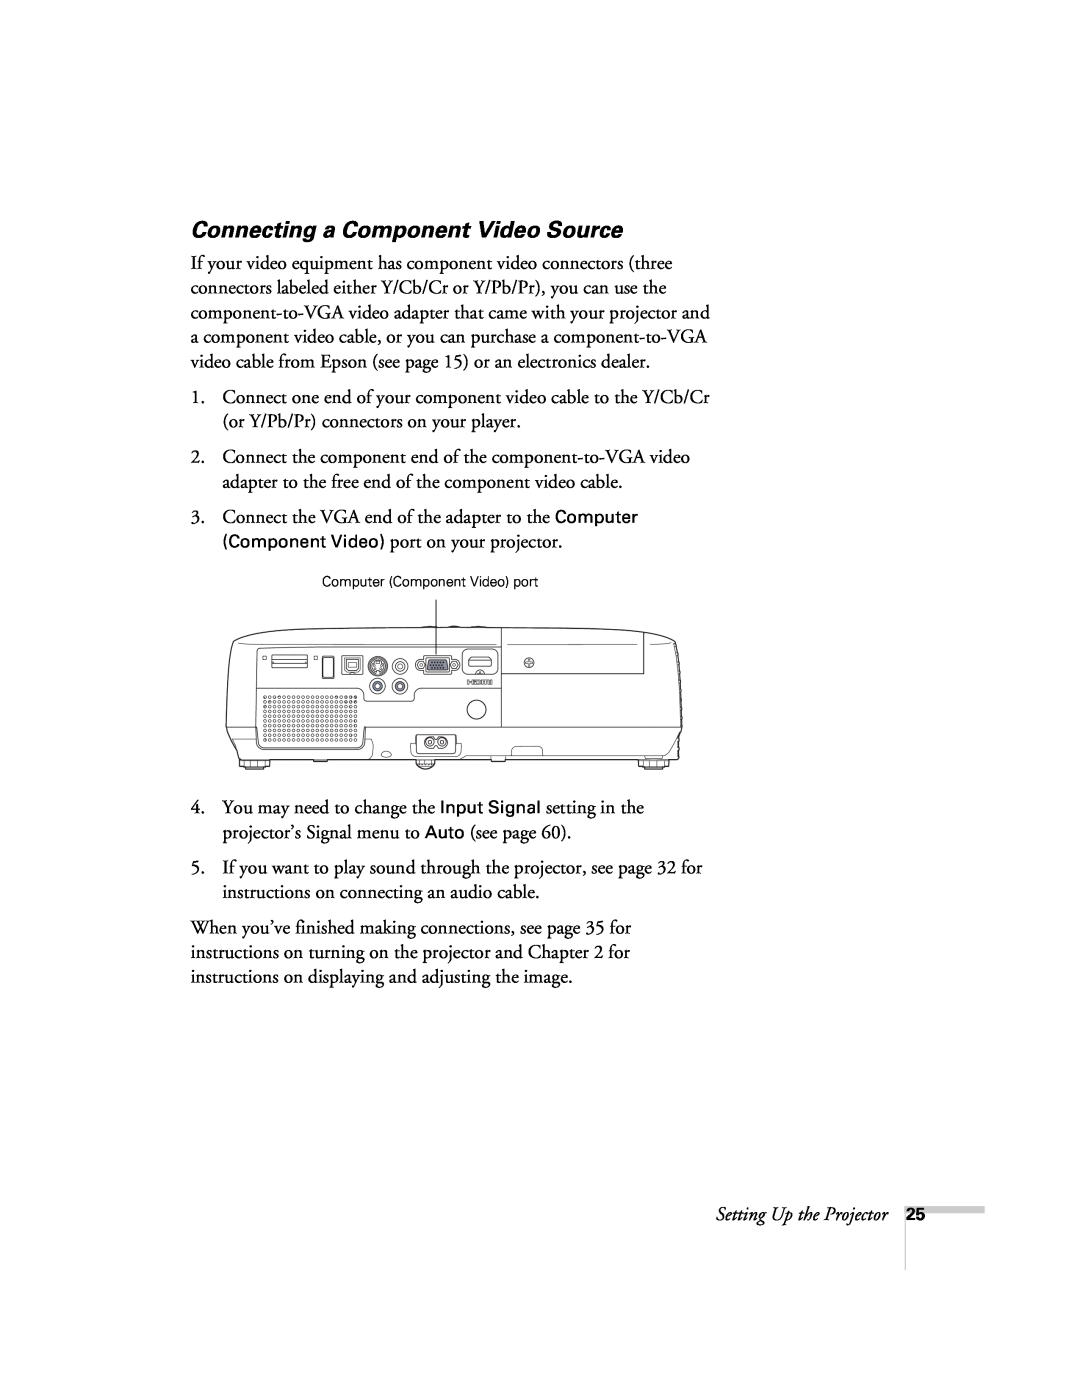 Univex 700 manual Connecting a Component Video Source, Computer Component Video port 